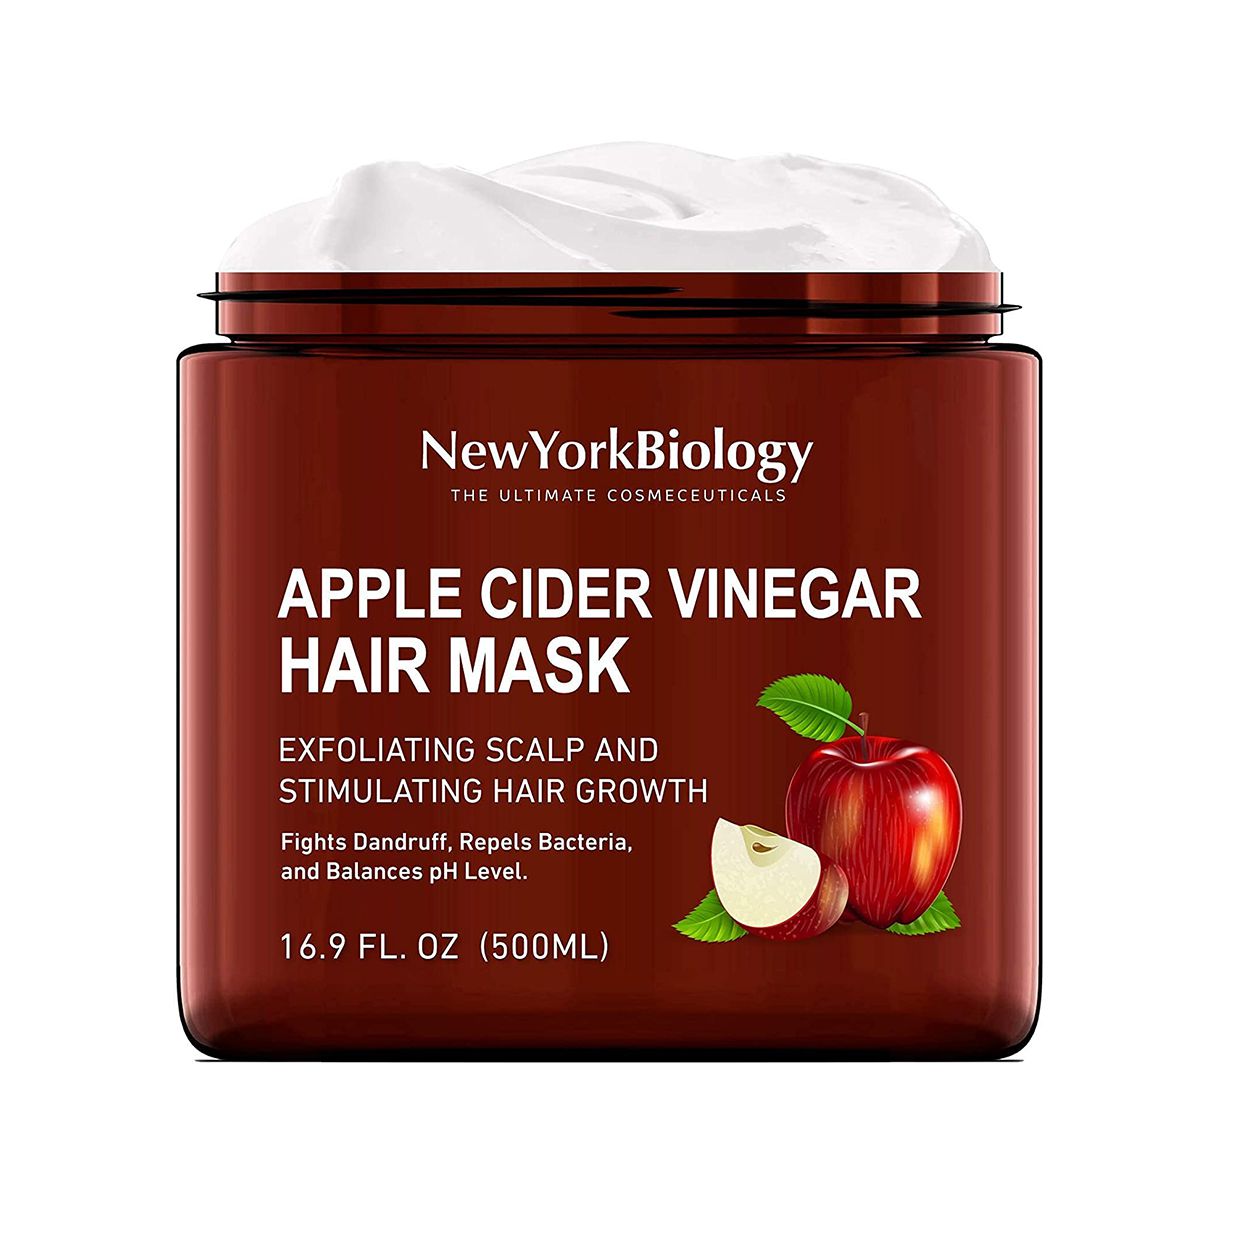 New York Biology Apple Cider Vinegar Hair Mask